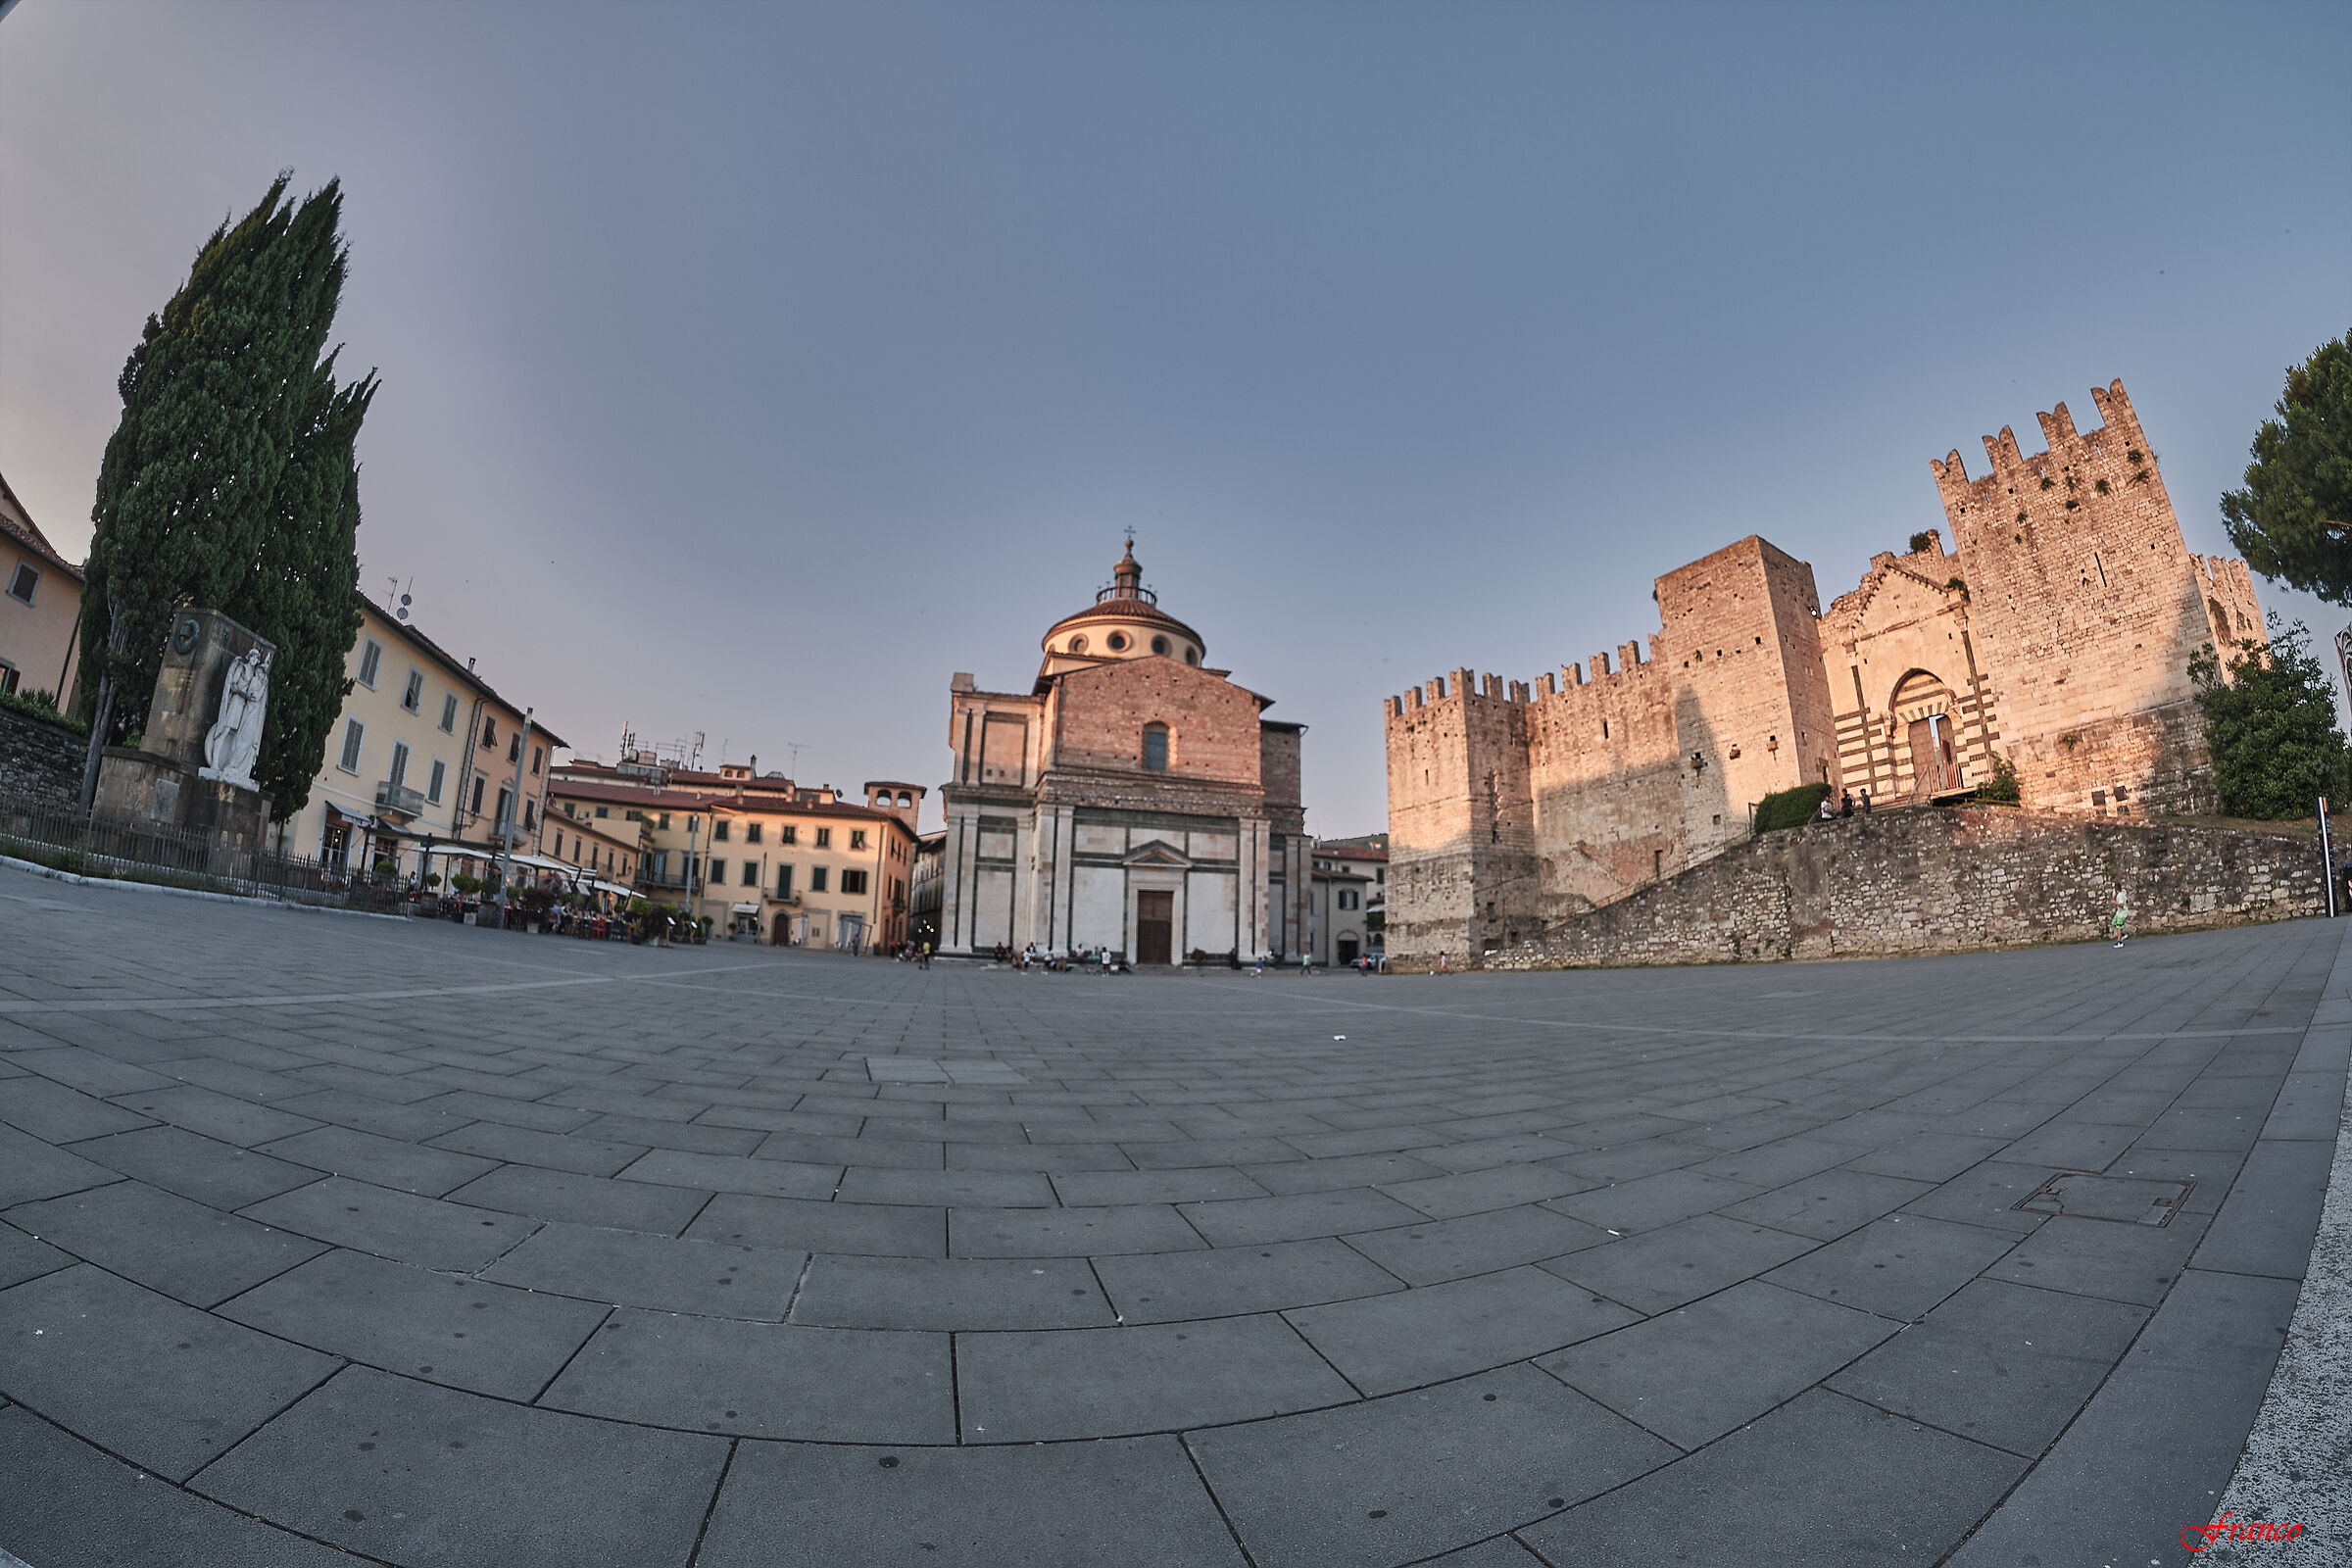 Piazza Santa Maria delle Carceri at sunset...